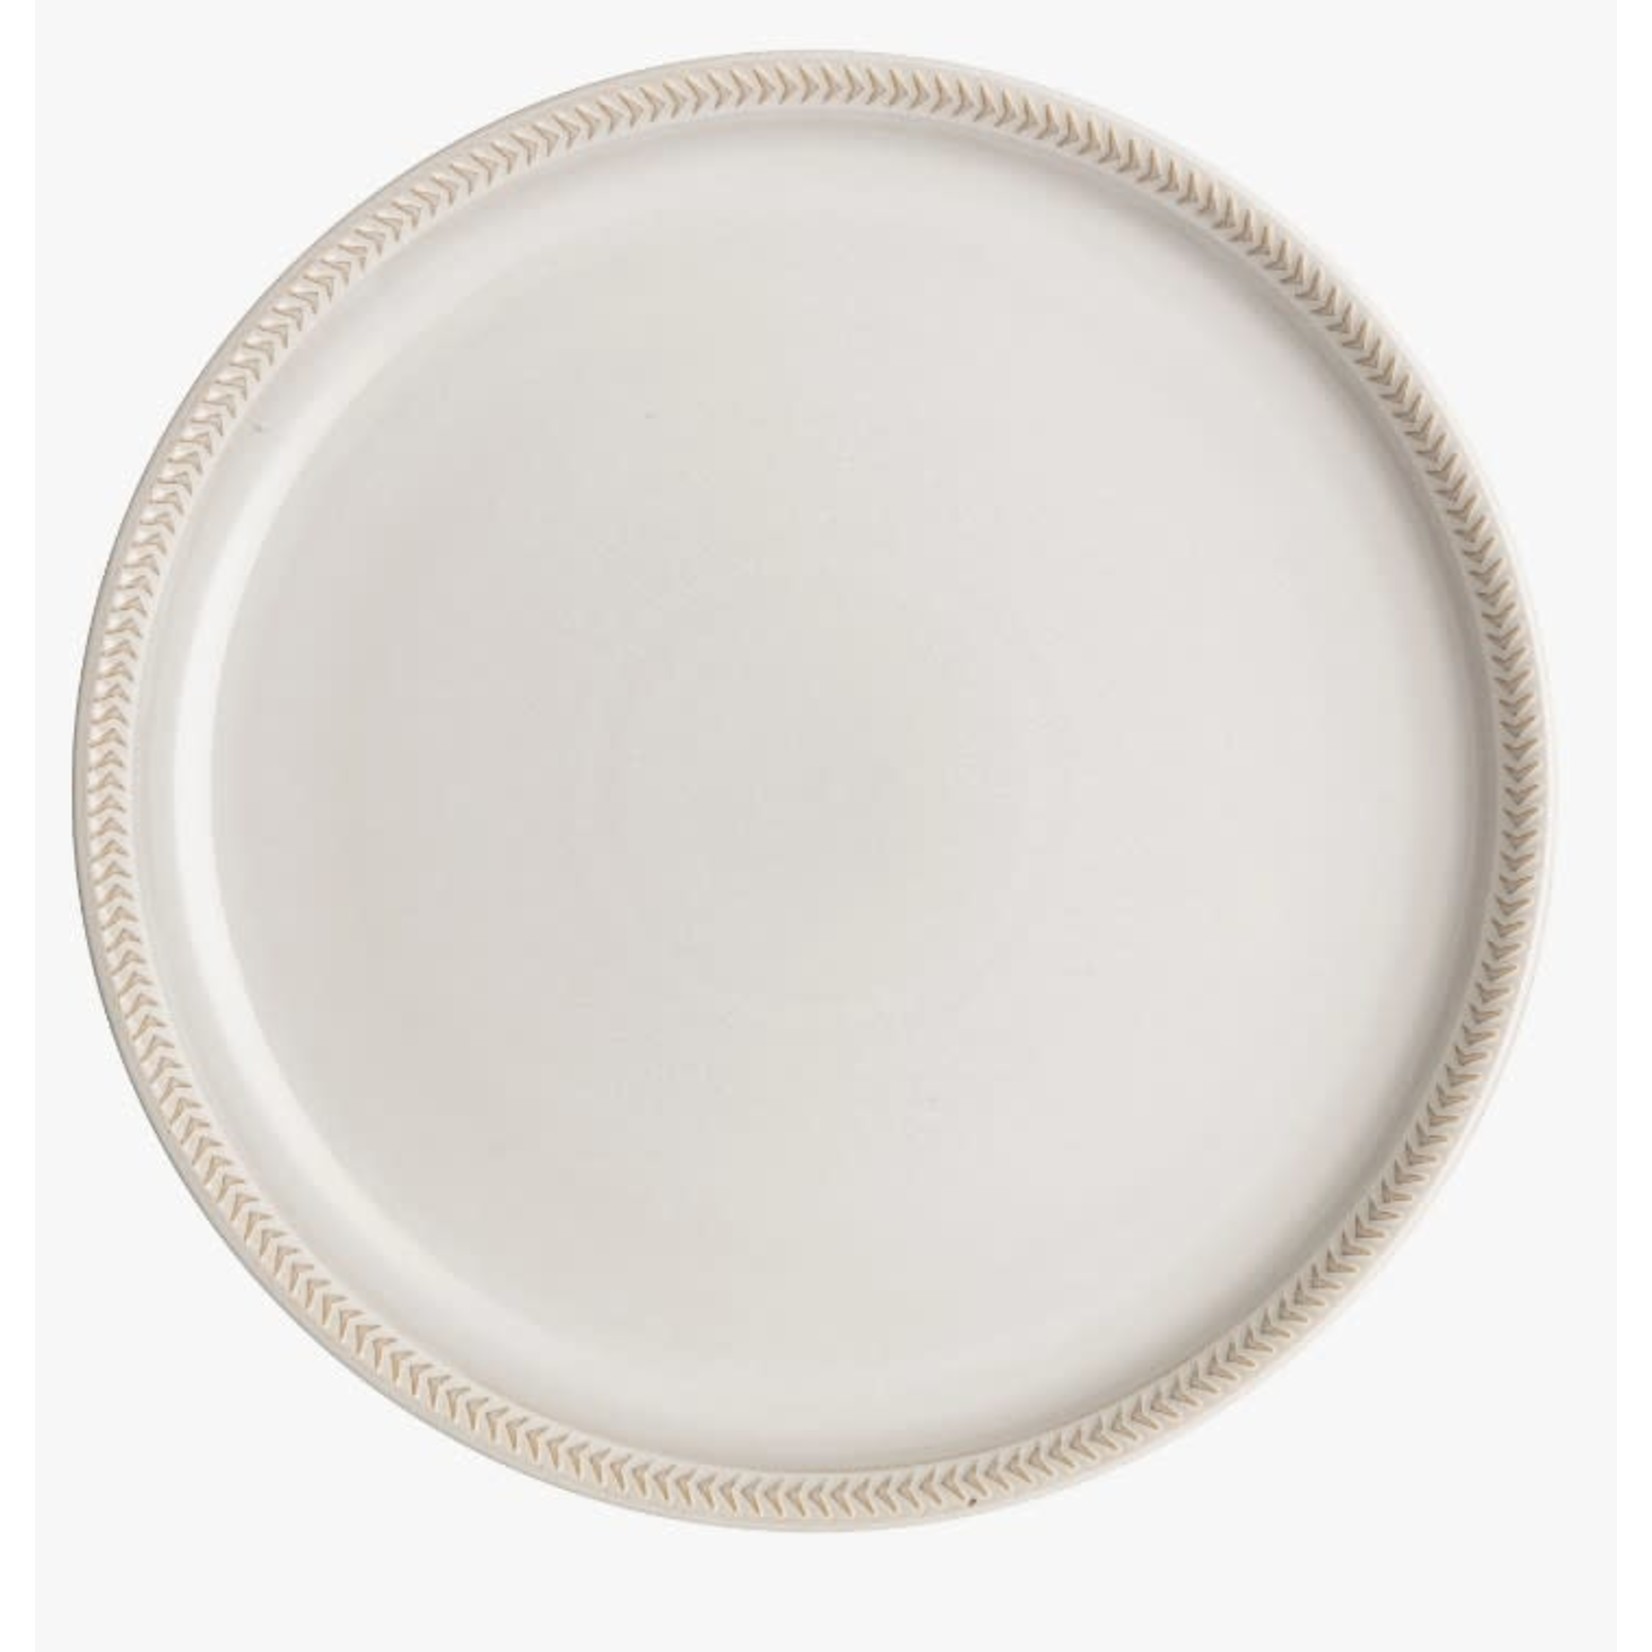 Mickler & Co. Natural Textured White Dinner Plate